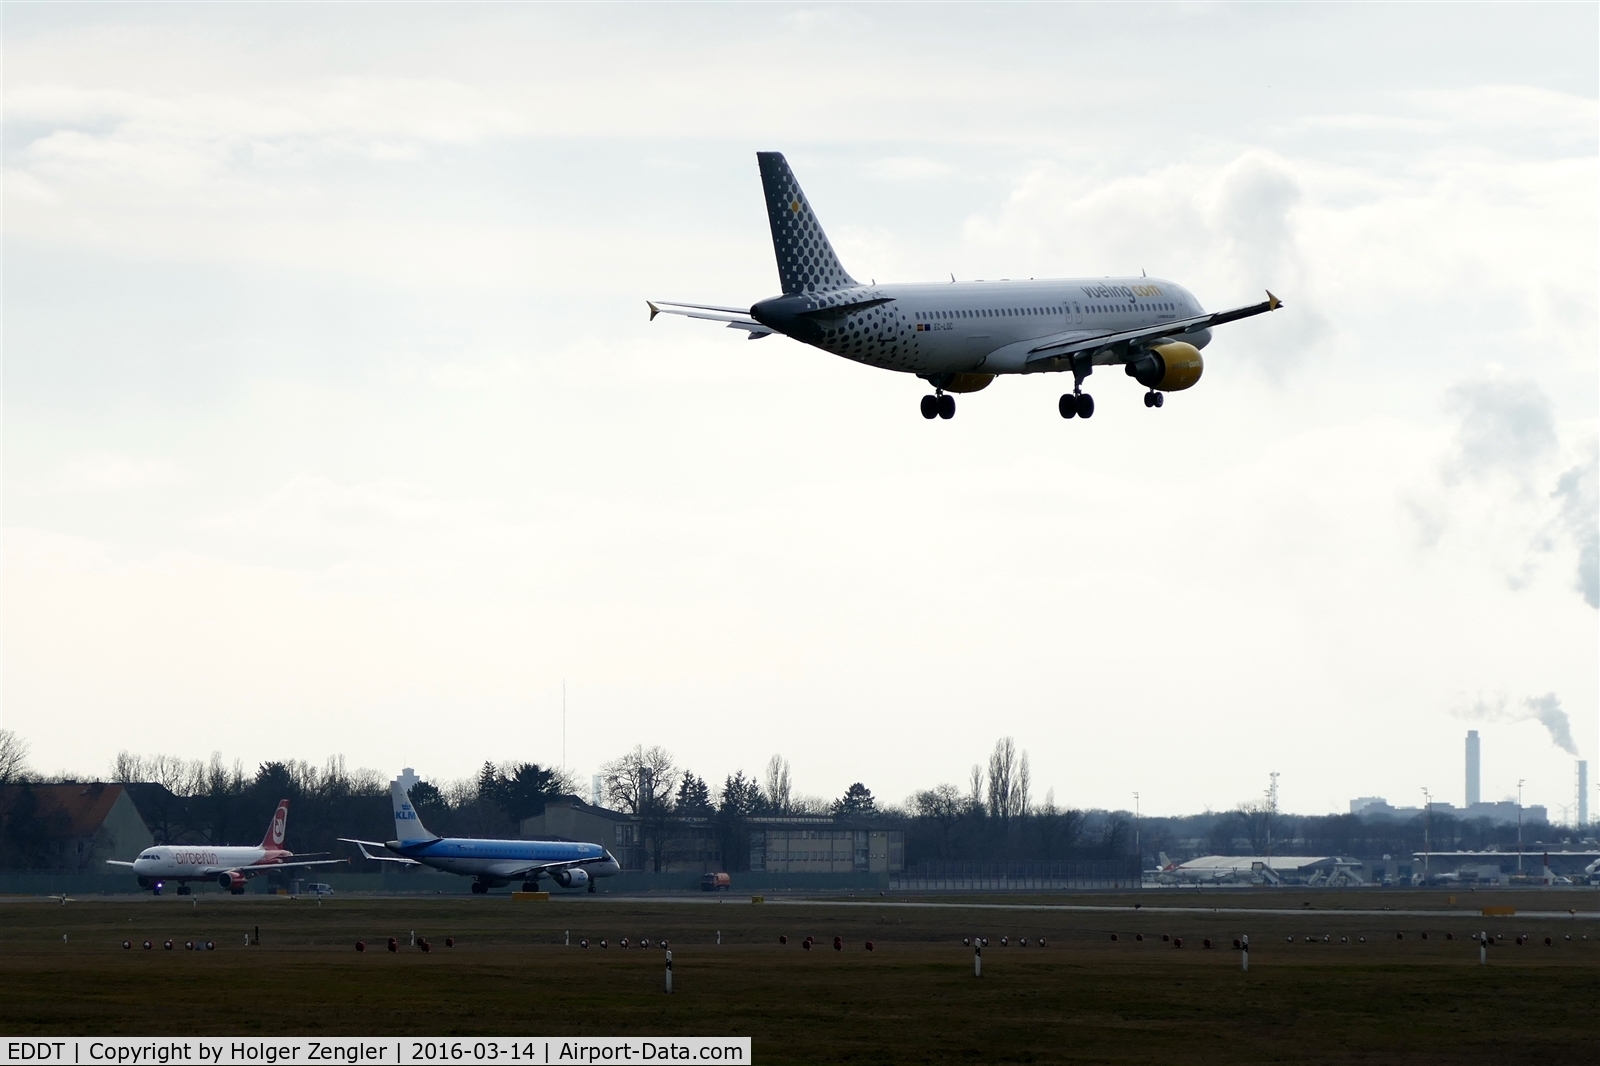 Tegel International Airport (closing in 2011), Berlin Germany (EDDT) - Arrival on rwy 26R meets two depatures on rwy 26L....